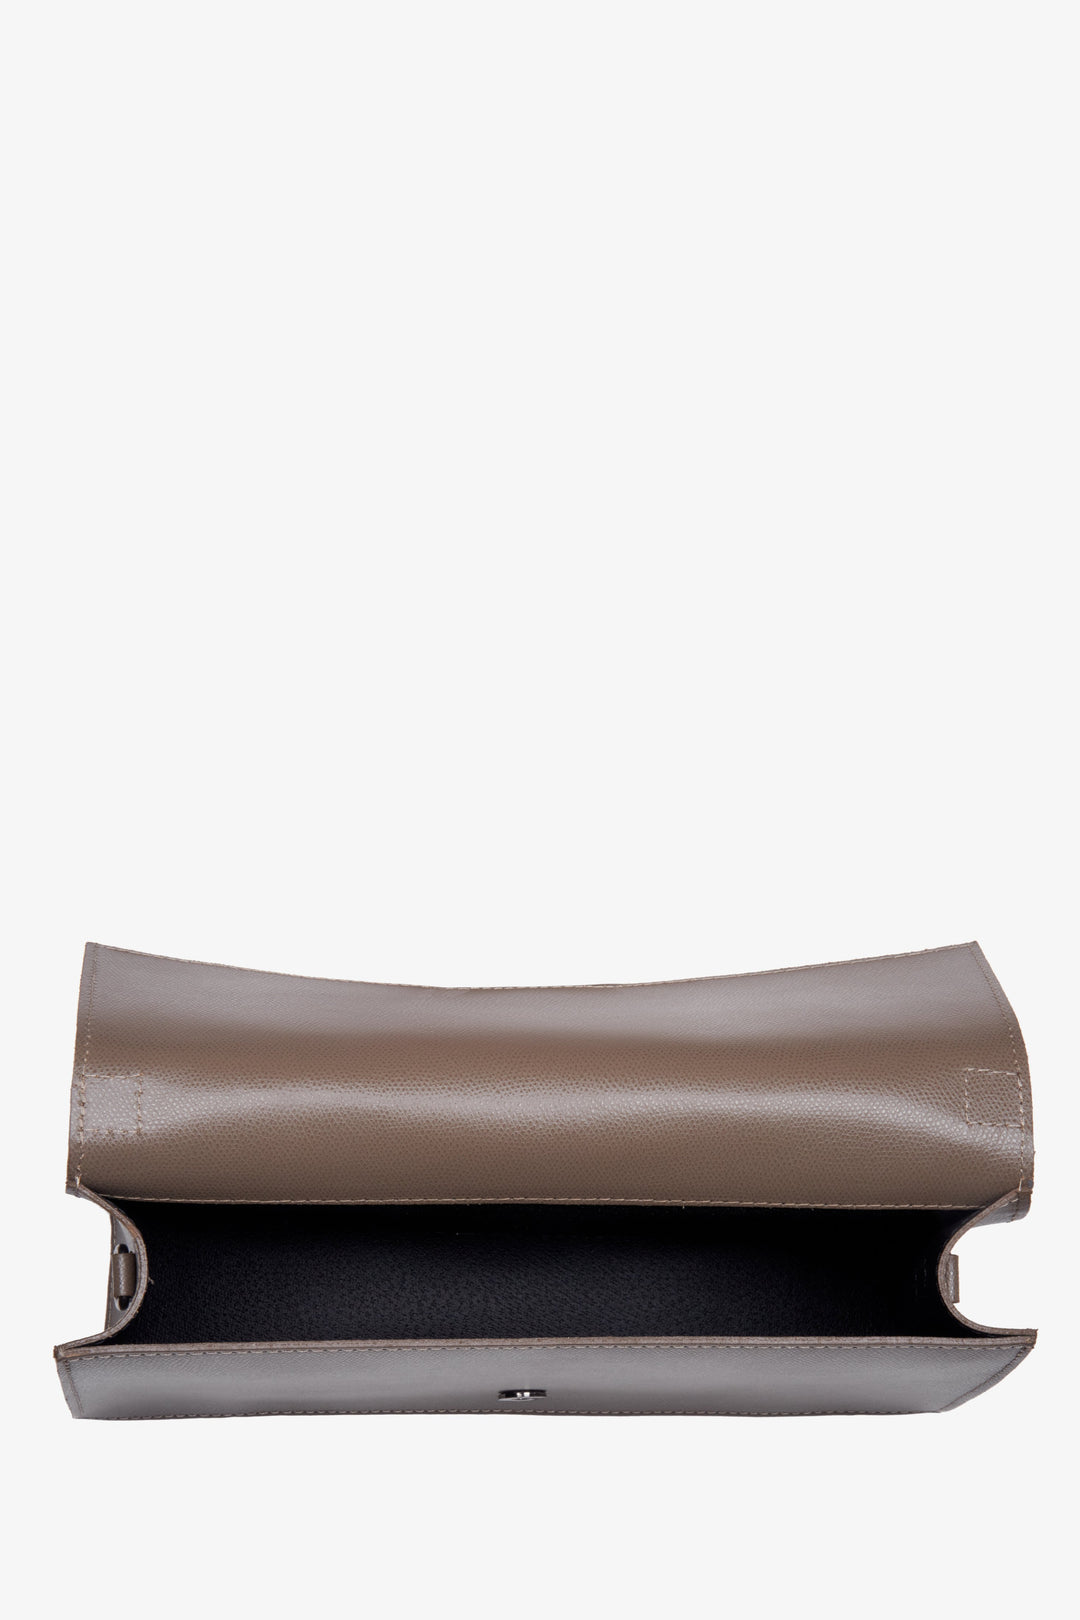 Women's small brown leather handbag by Estro - interior of the model.